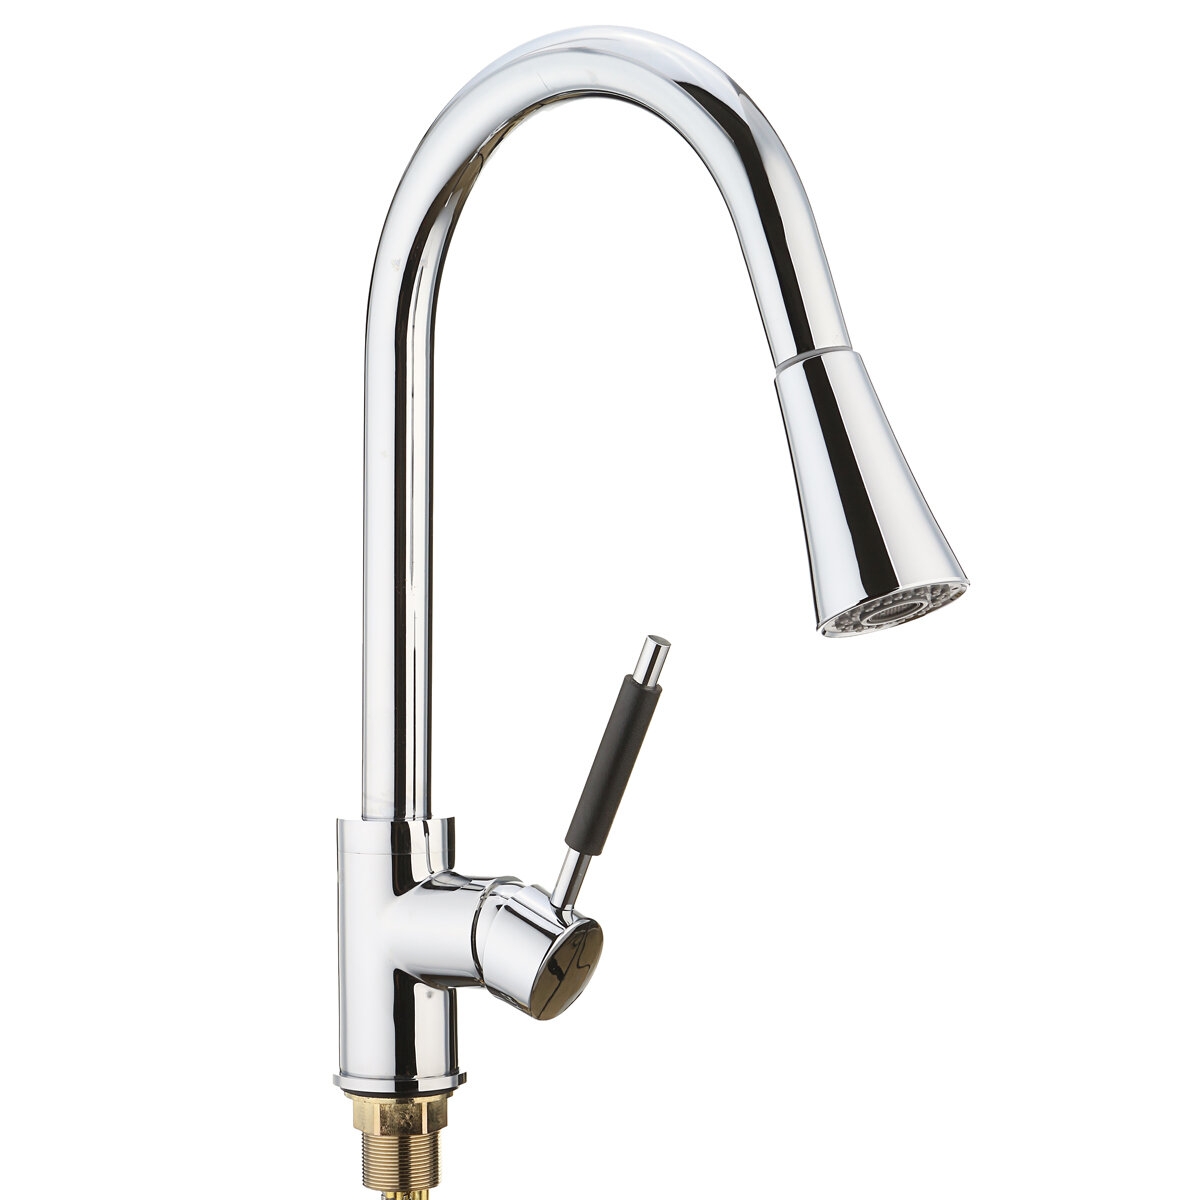 Kitchen Basin Sink Pull Out Tap Faucet Swivel Gooseneck Spout Spray Water Mixer